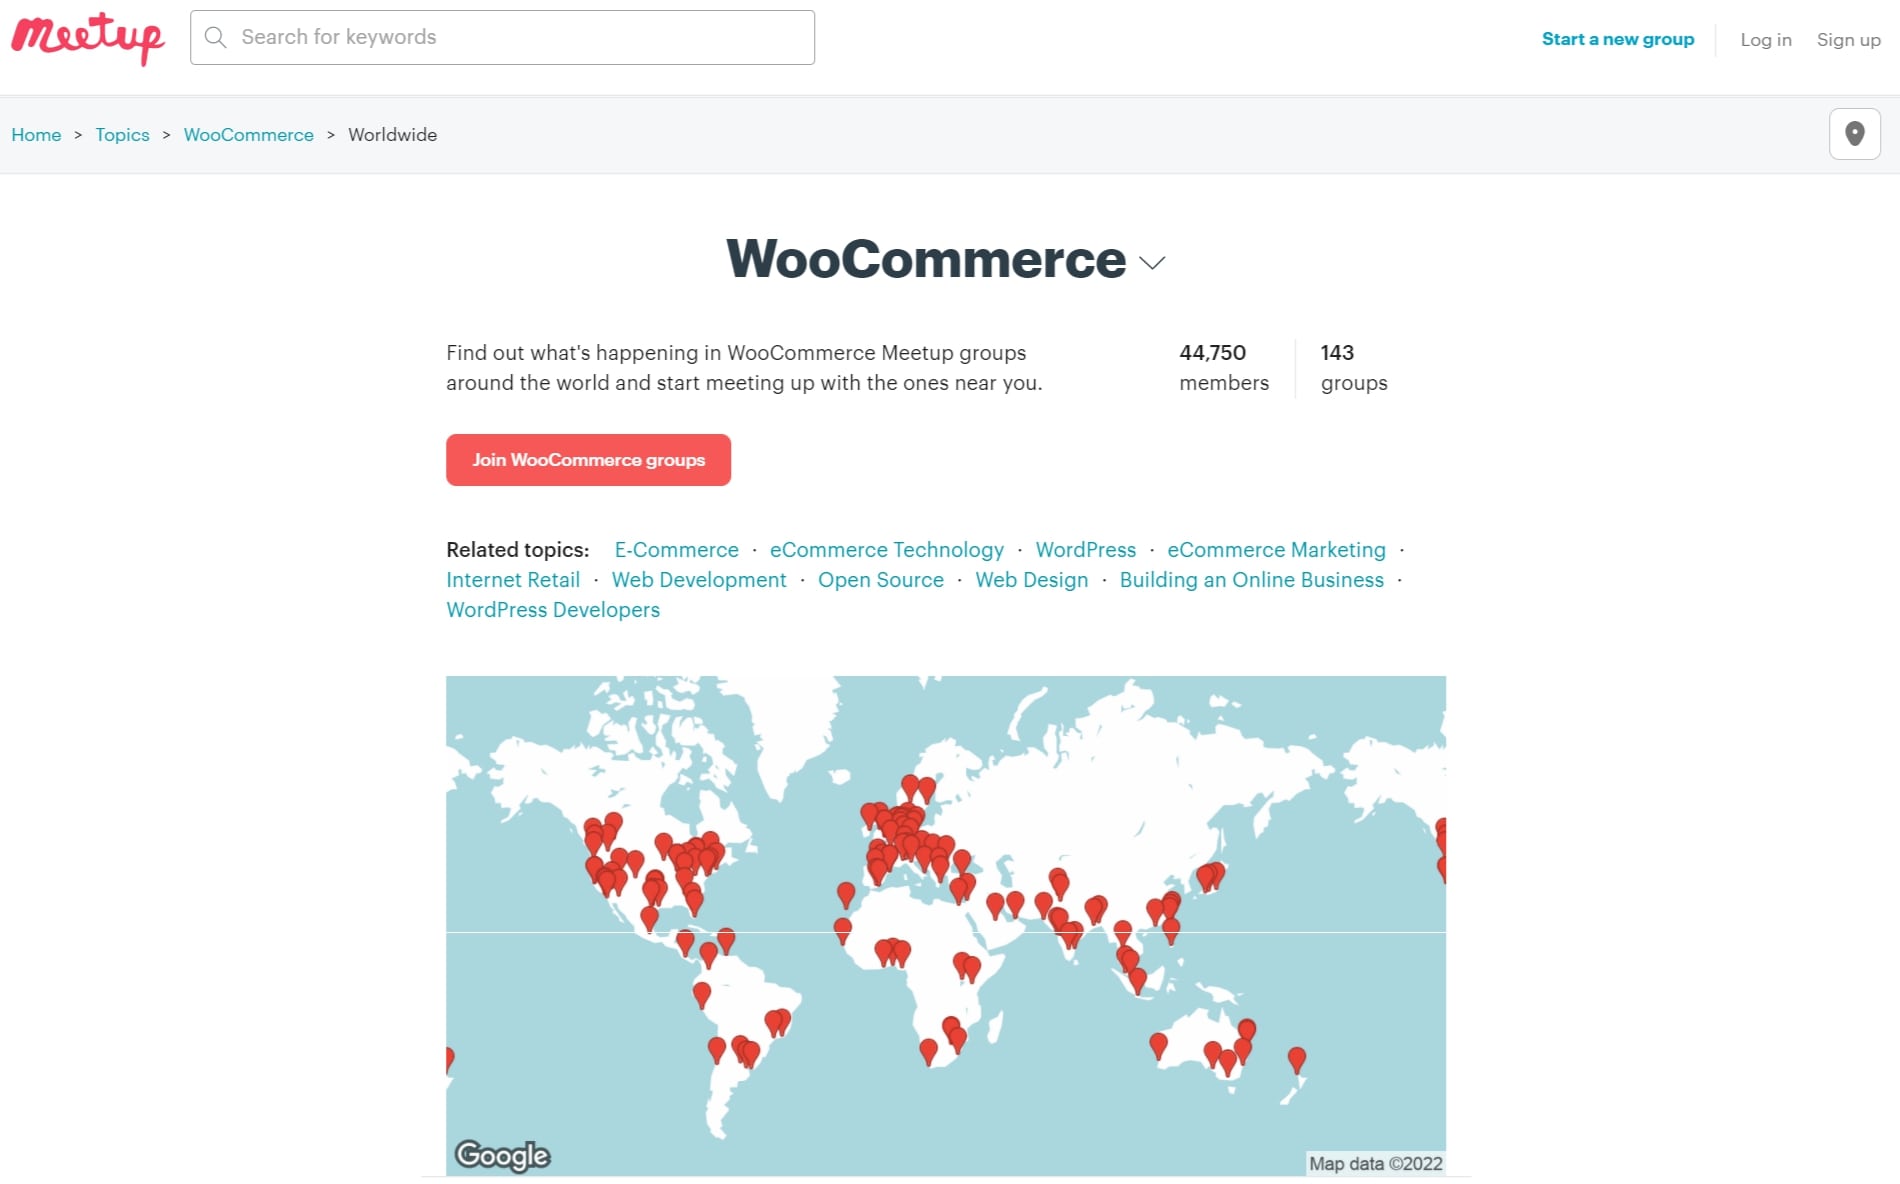 woocommerce users